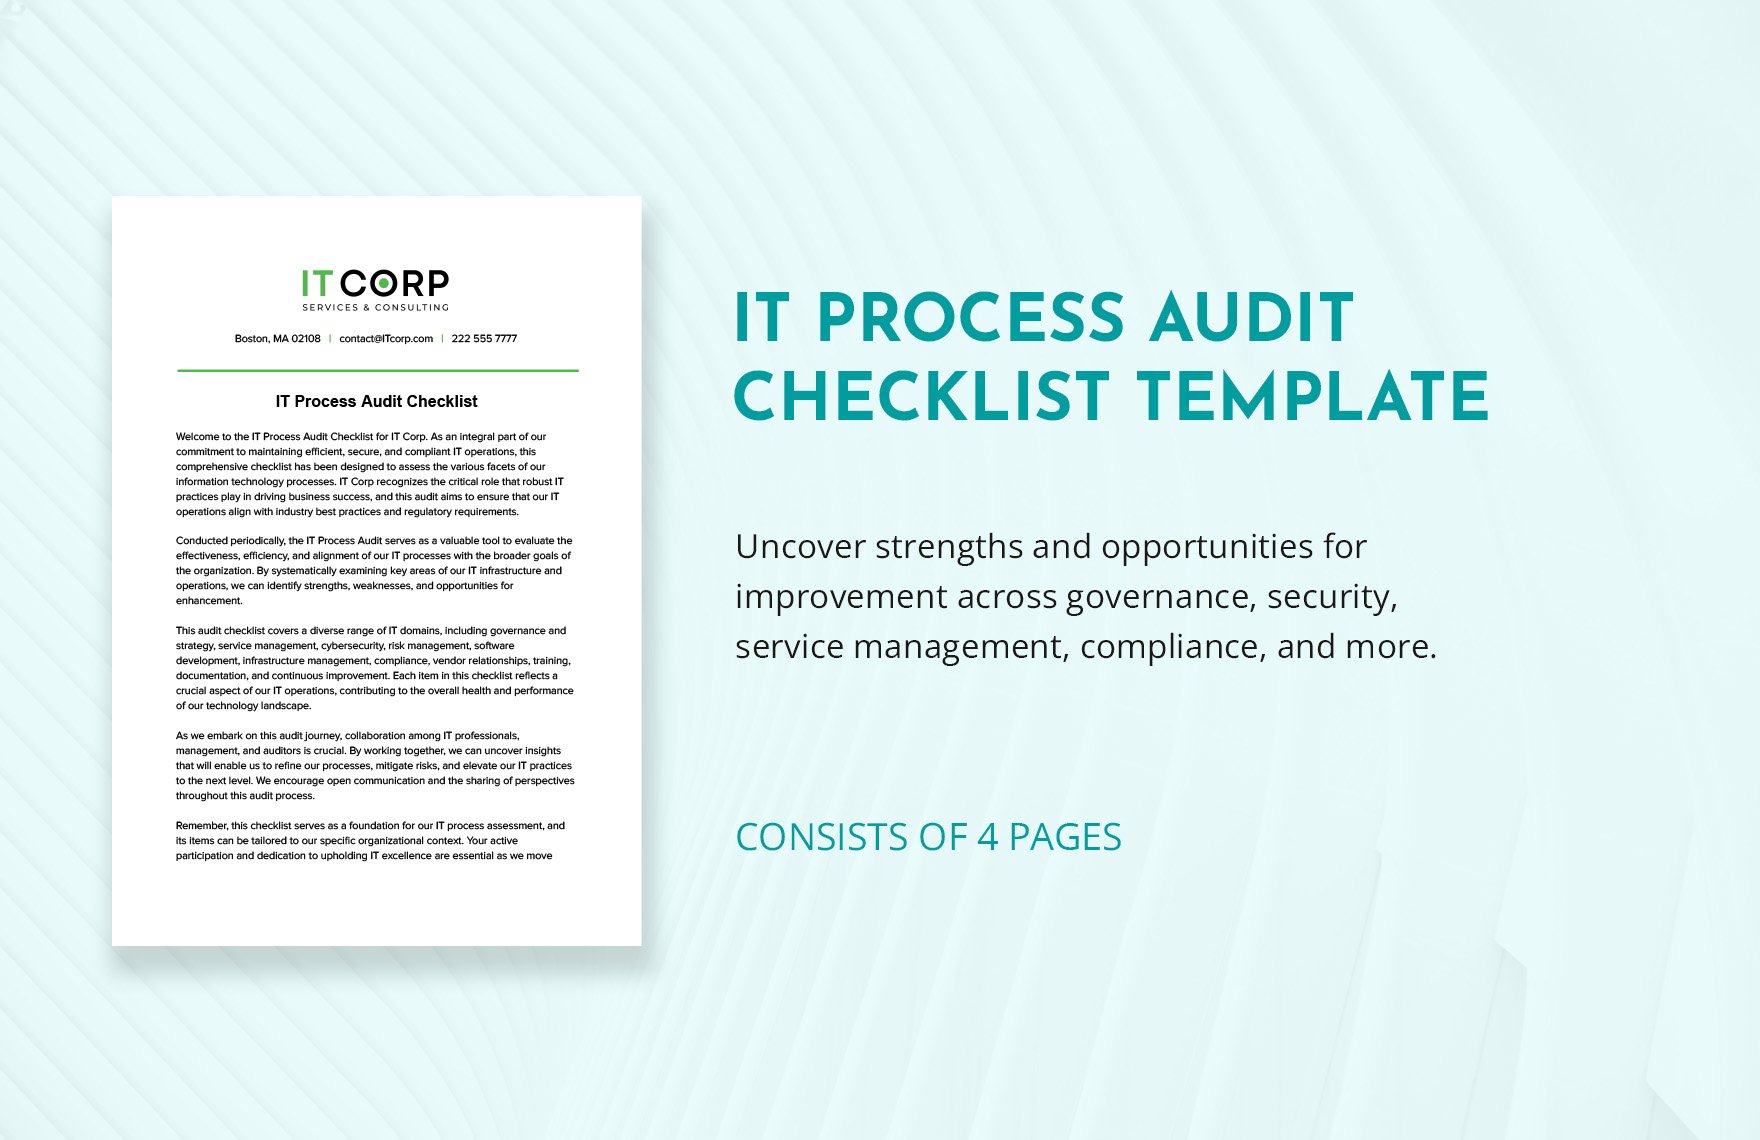 IT Process Audit Checklist Template